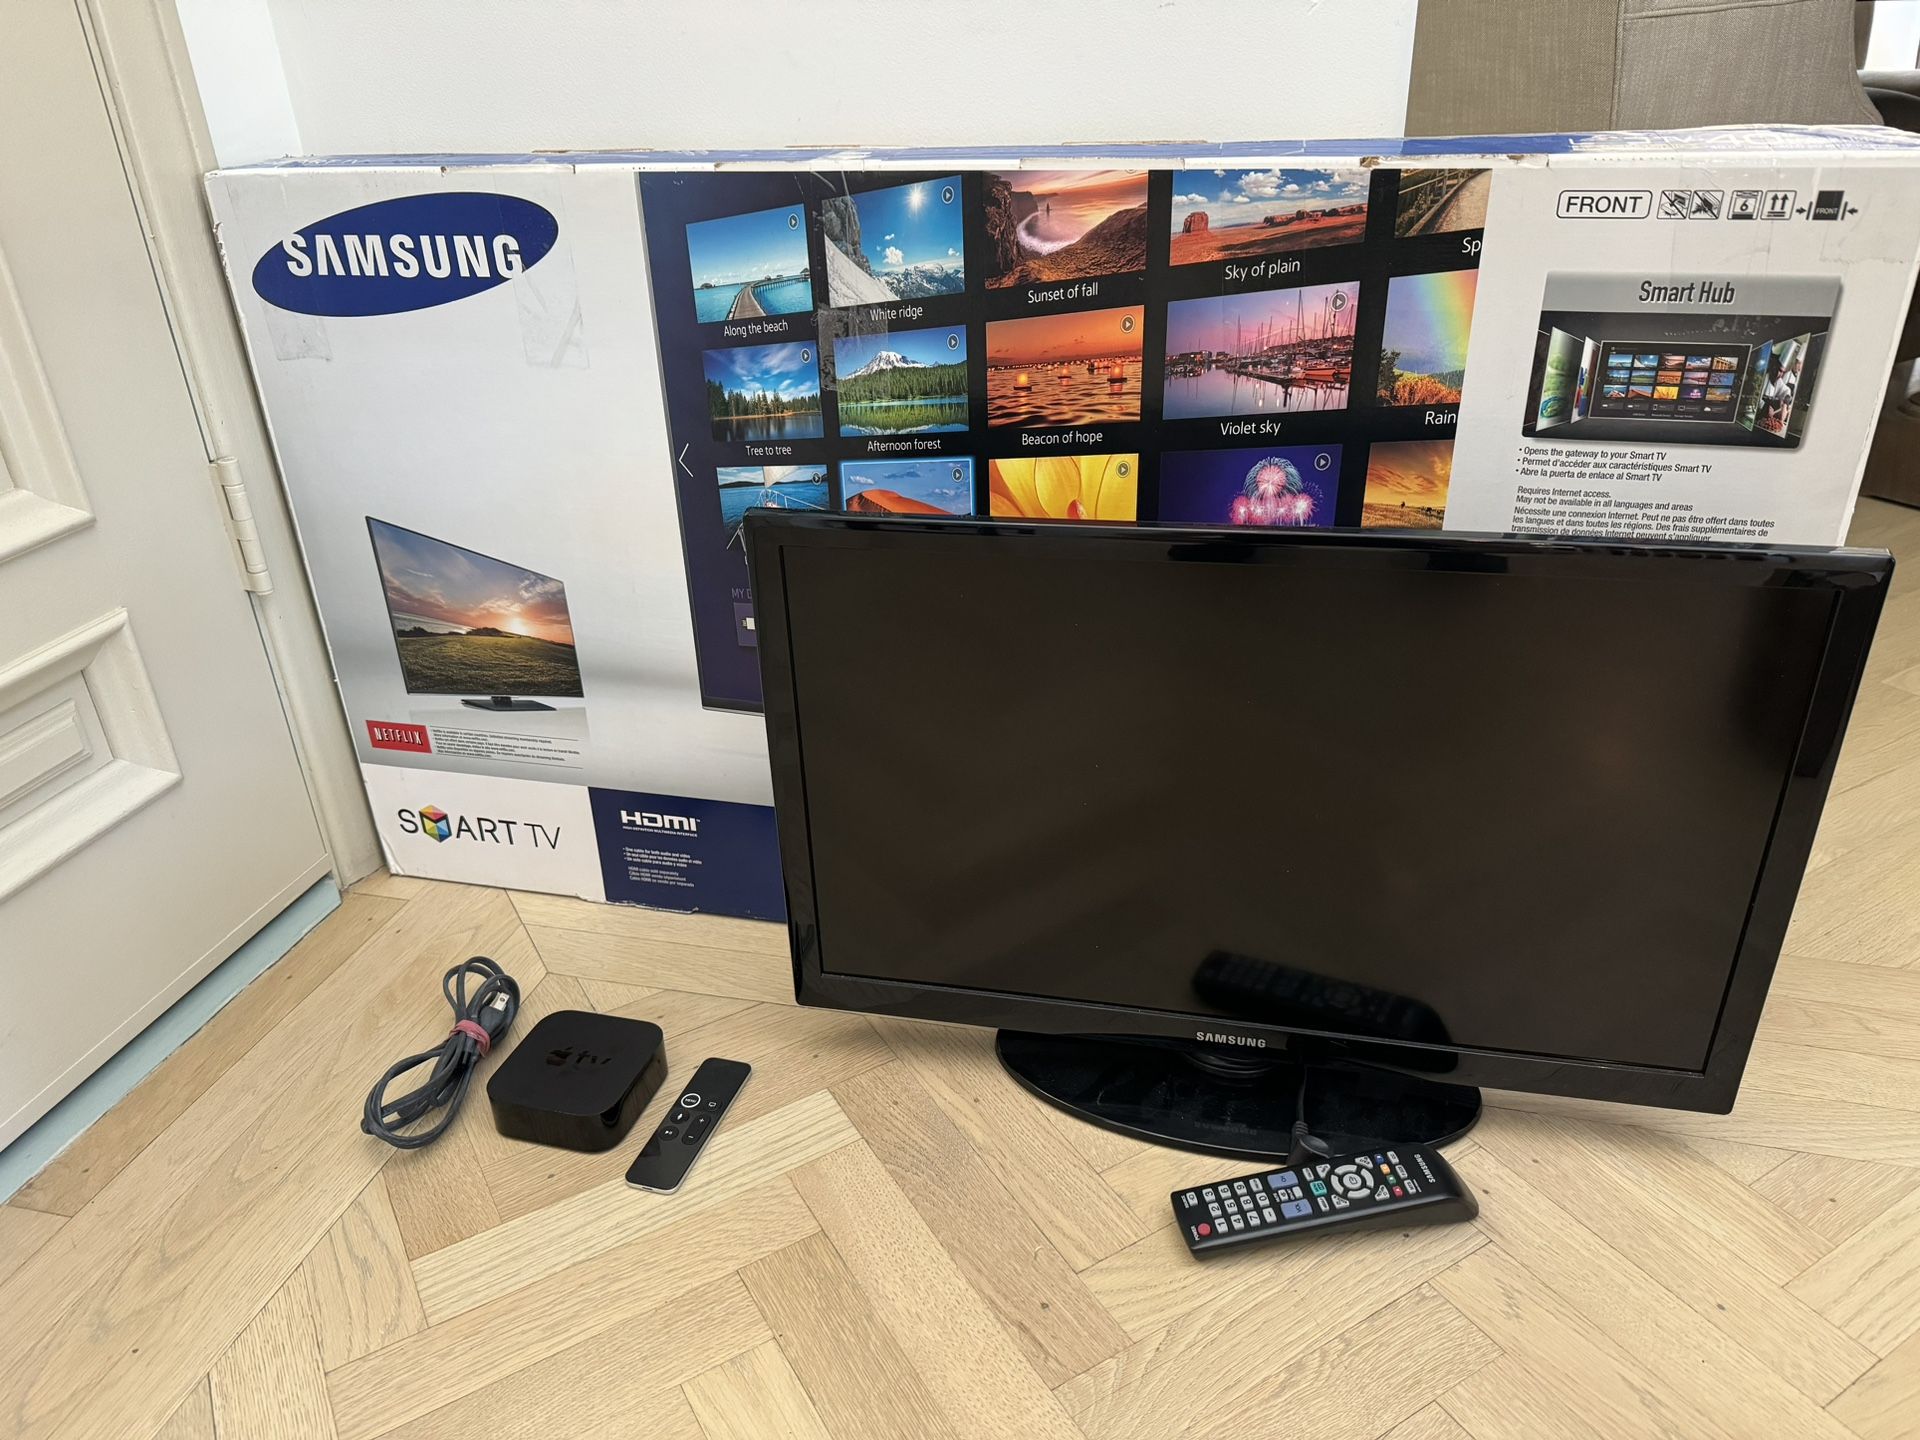 Apple TV HD + 2 Samsung TVs (40” and 26”)!